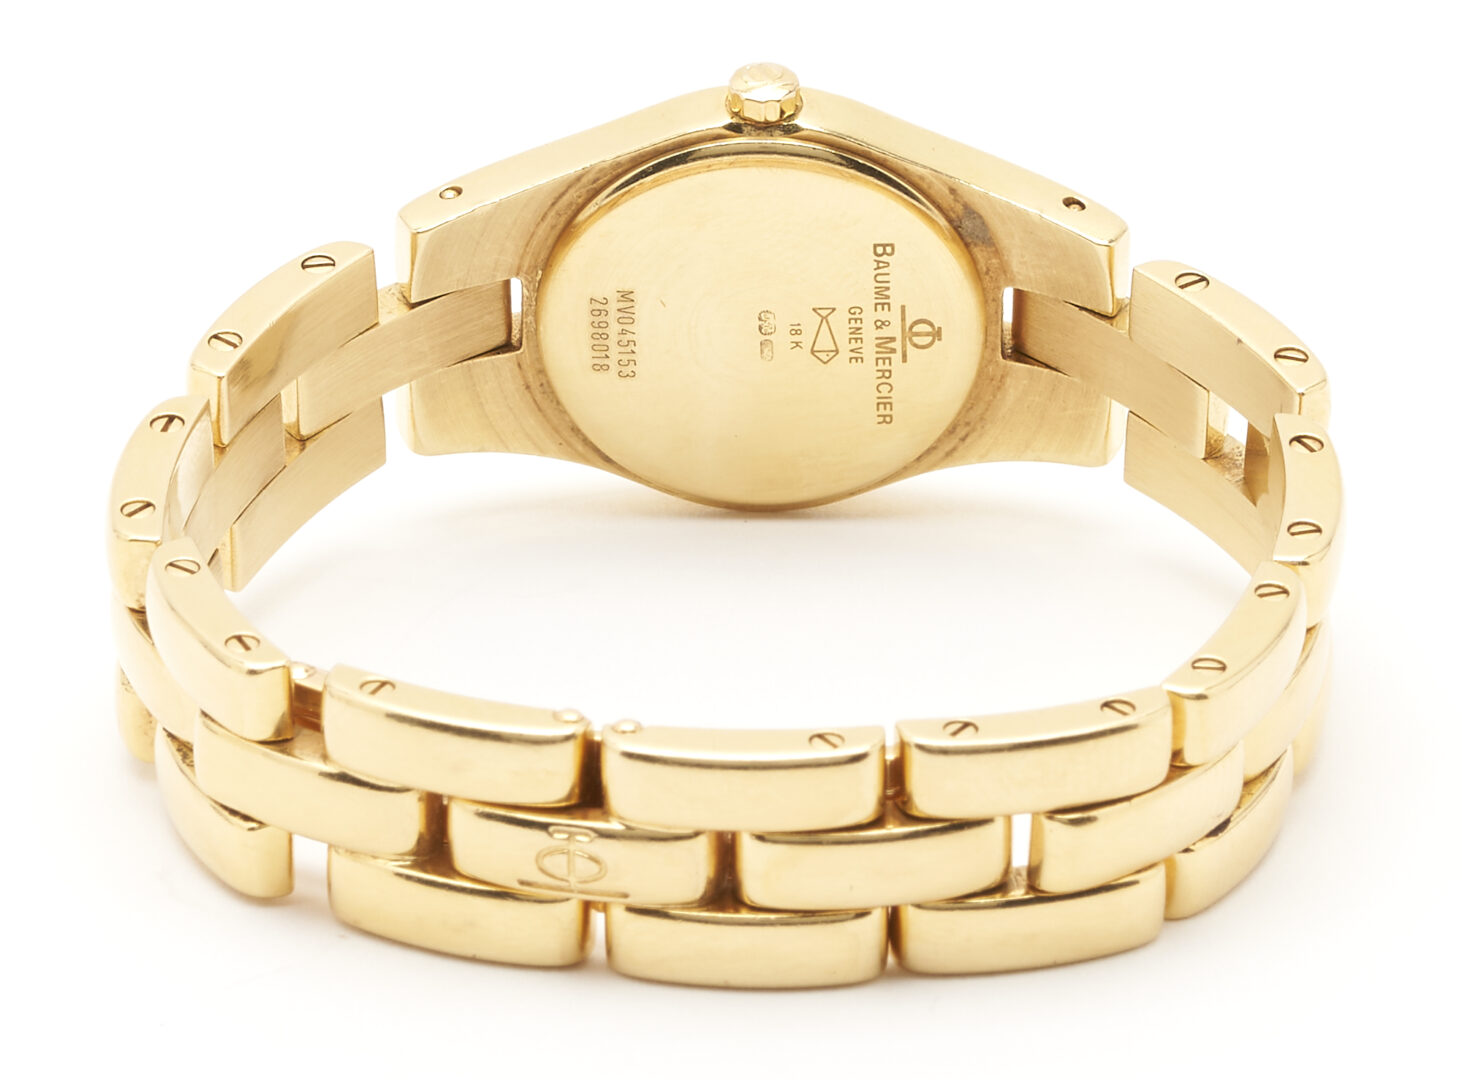 Lot 260: Ladies' 18k Gold Baume & Mercier Linea Wristwatch